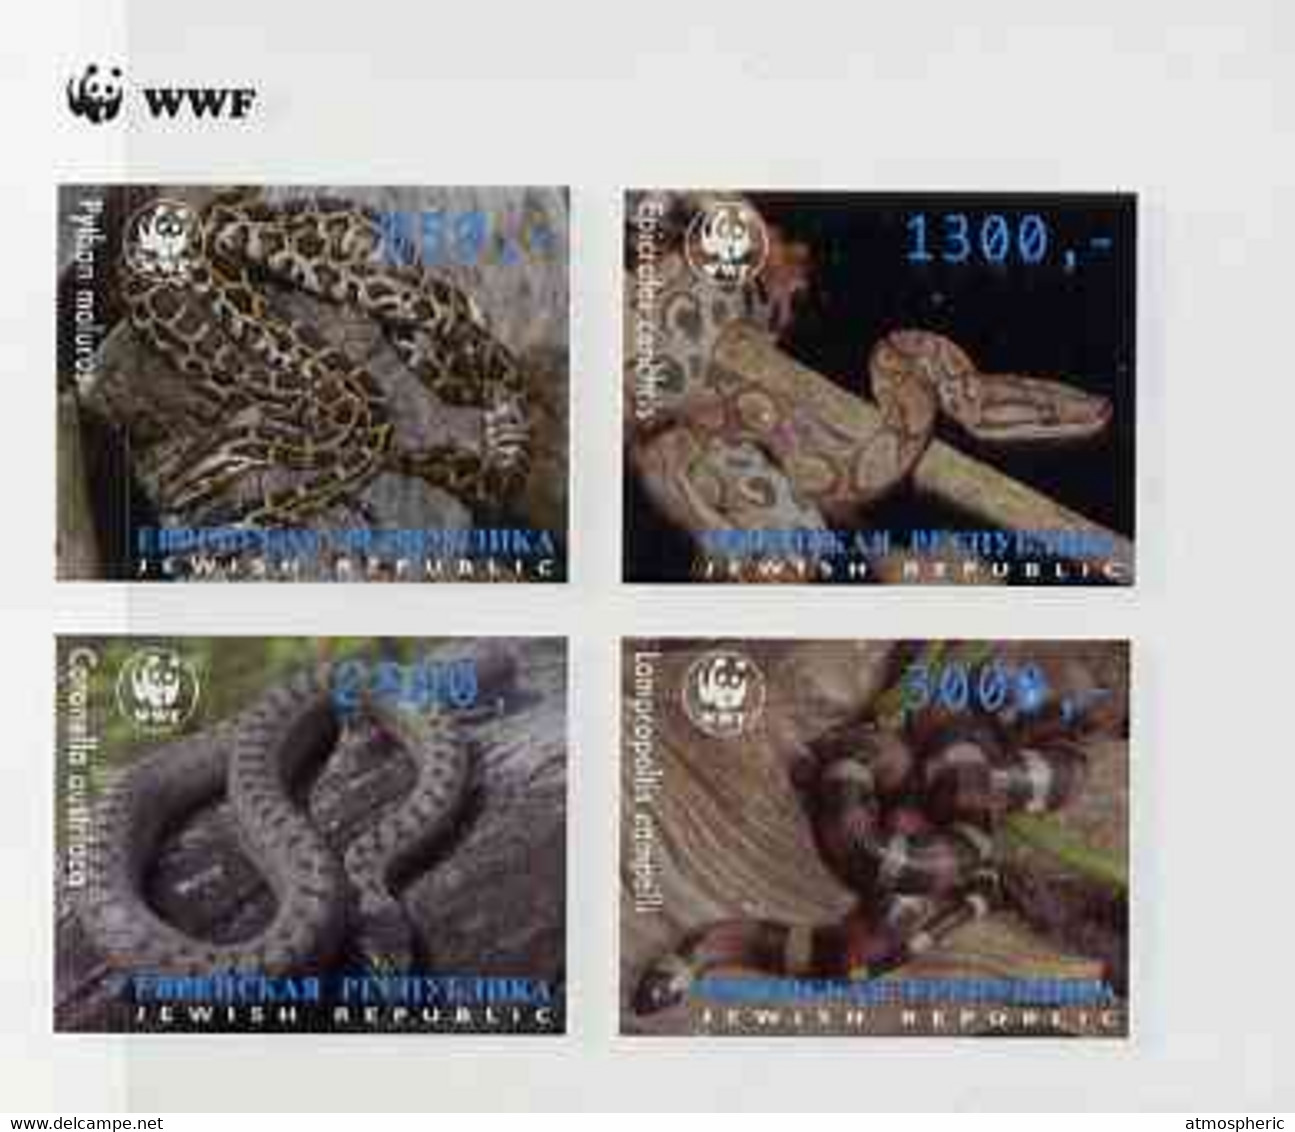 Jewish Republic 1997 WWF - Snakes Imperf Sheetlet Containing Complete Set Of 4 U/M - Federative Social Soviet Republic